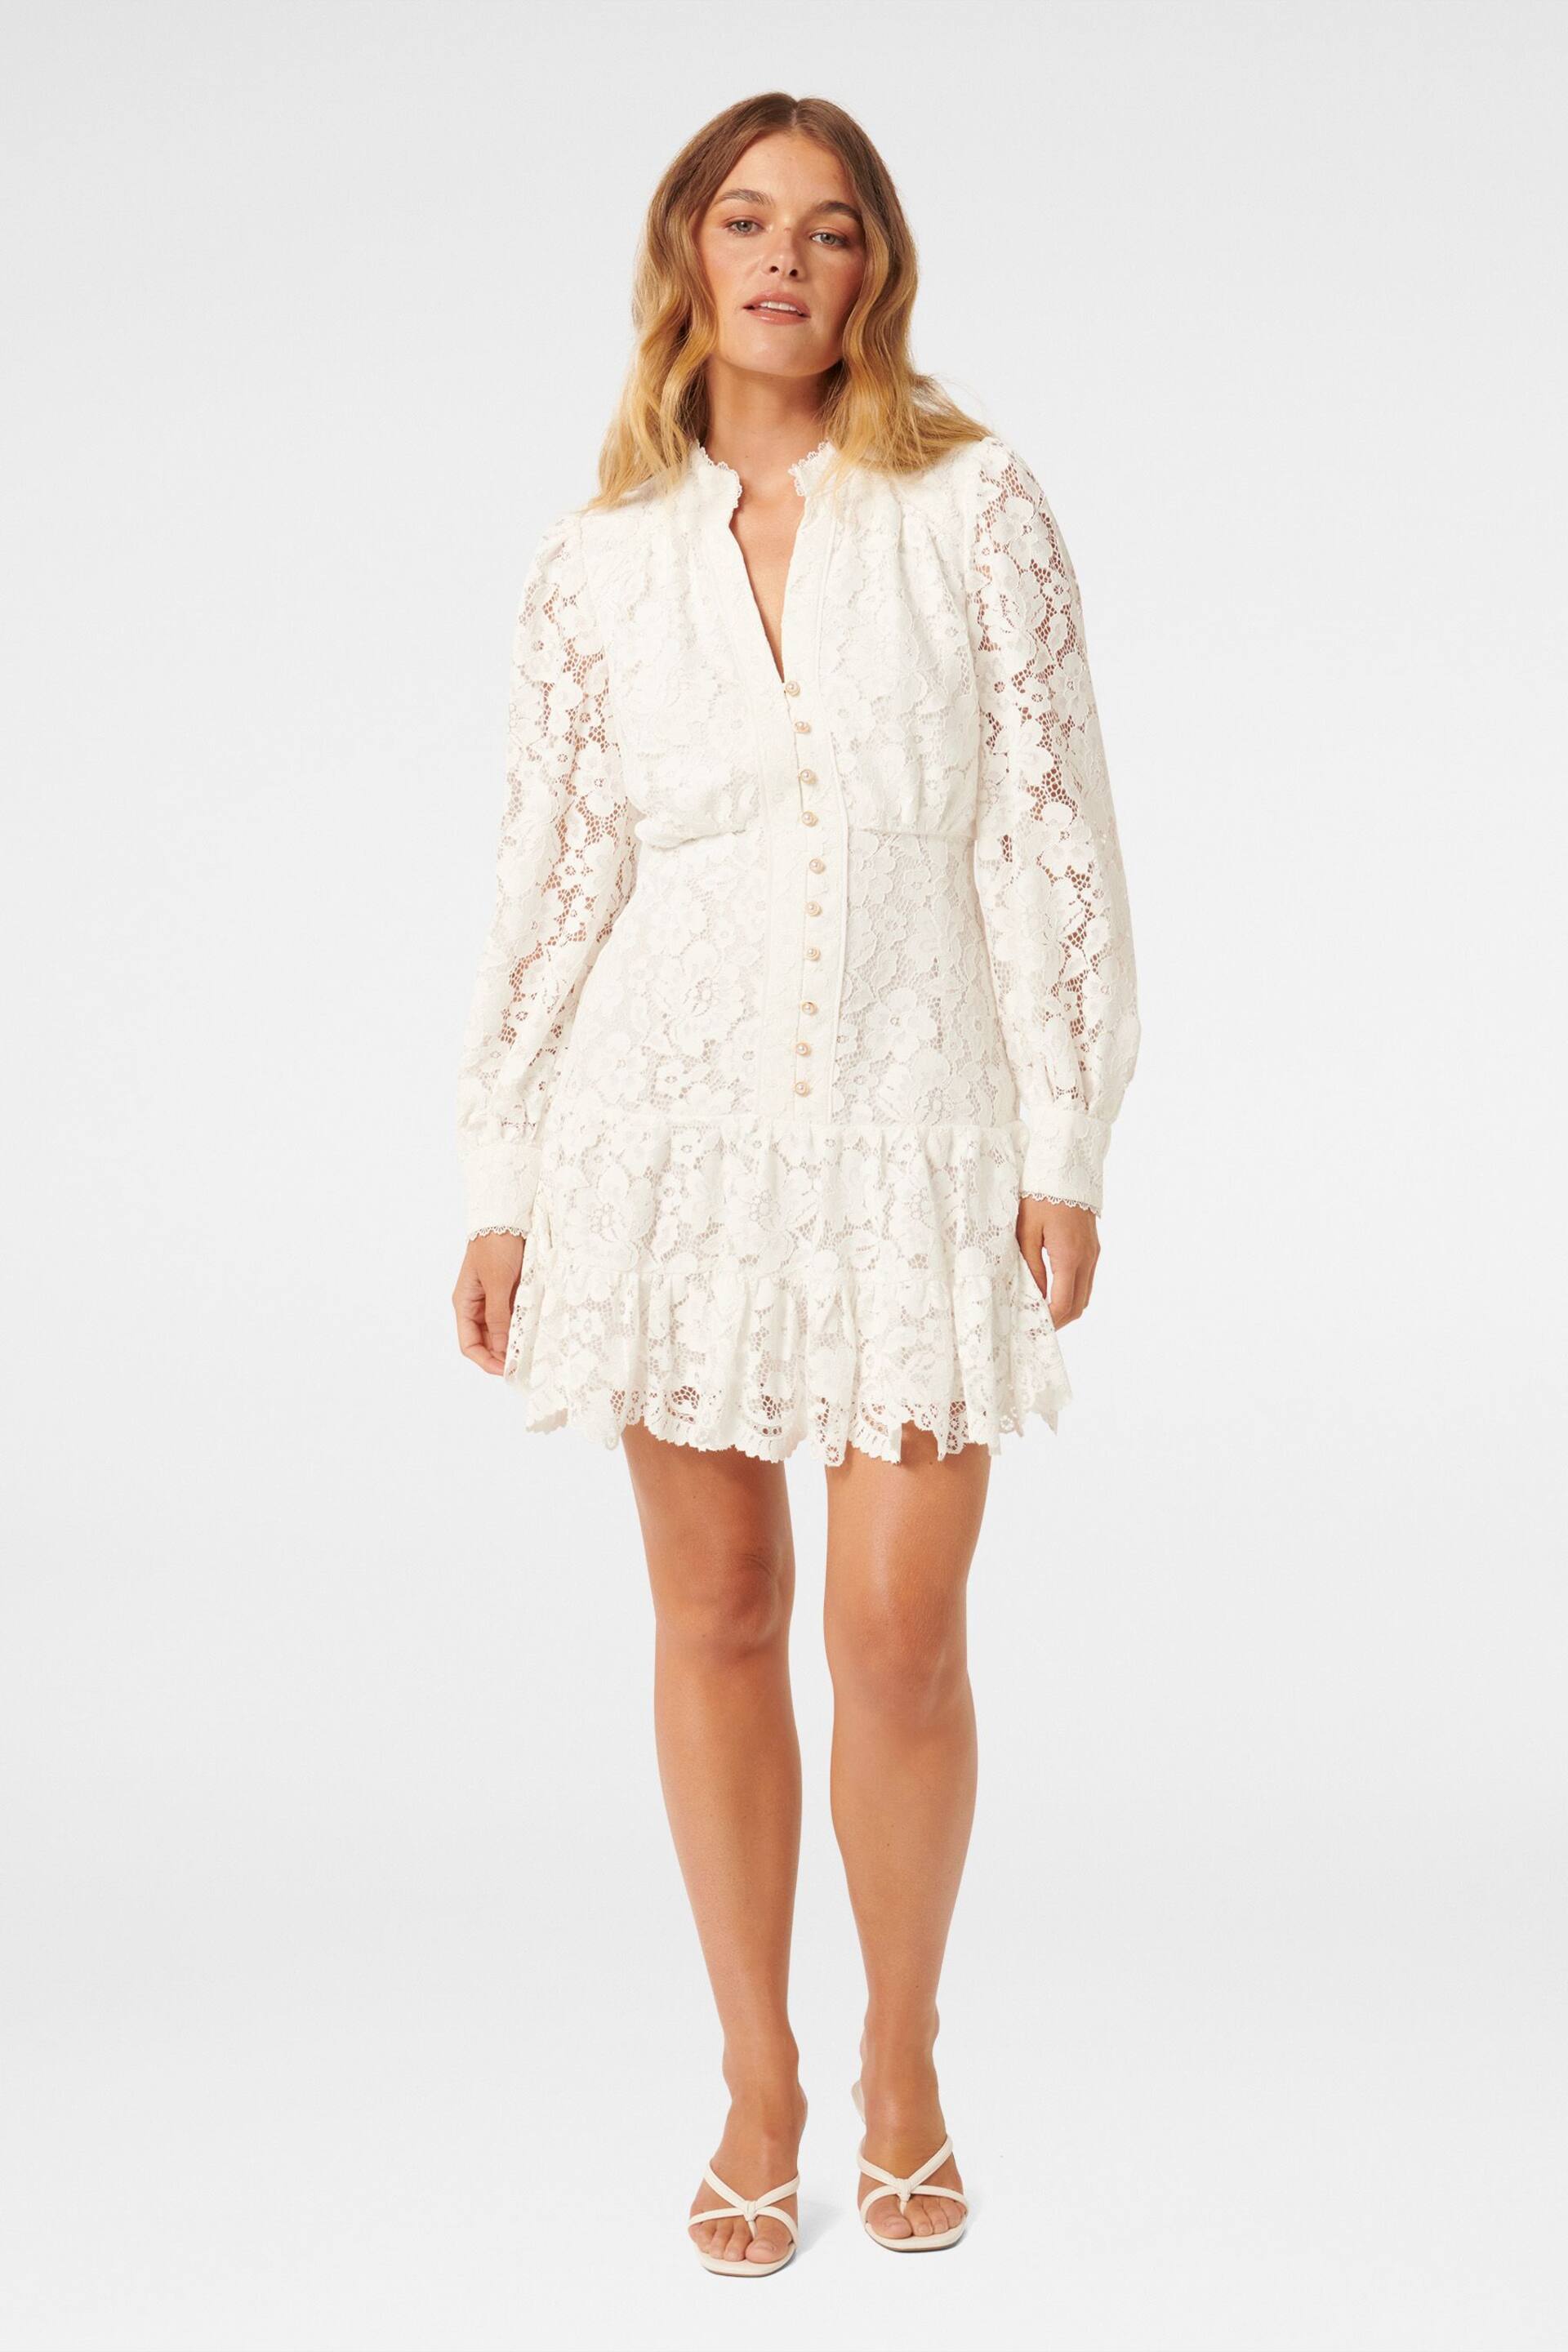 Forever New White Evie Petite Lace Mini Dress - Image 5 of 5